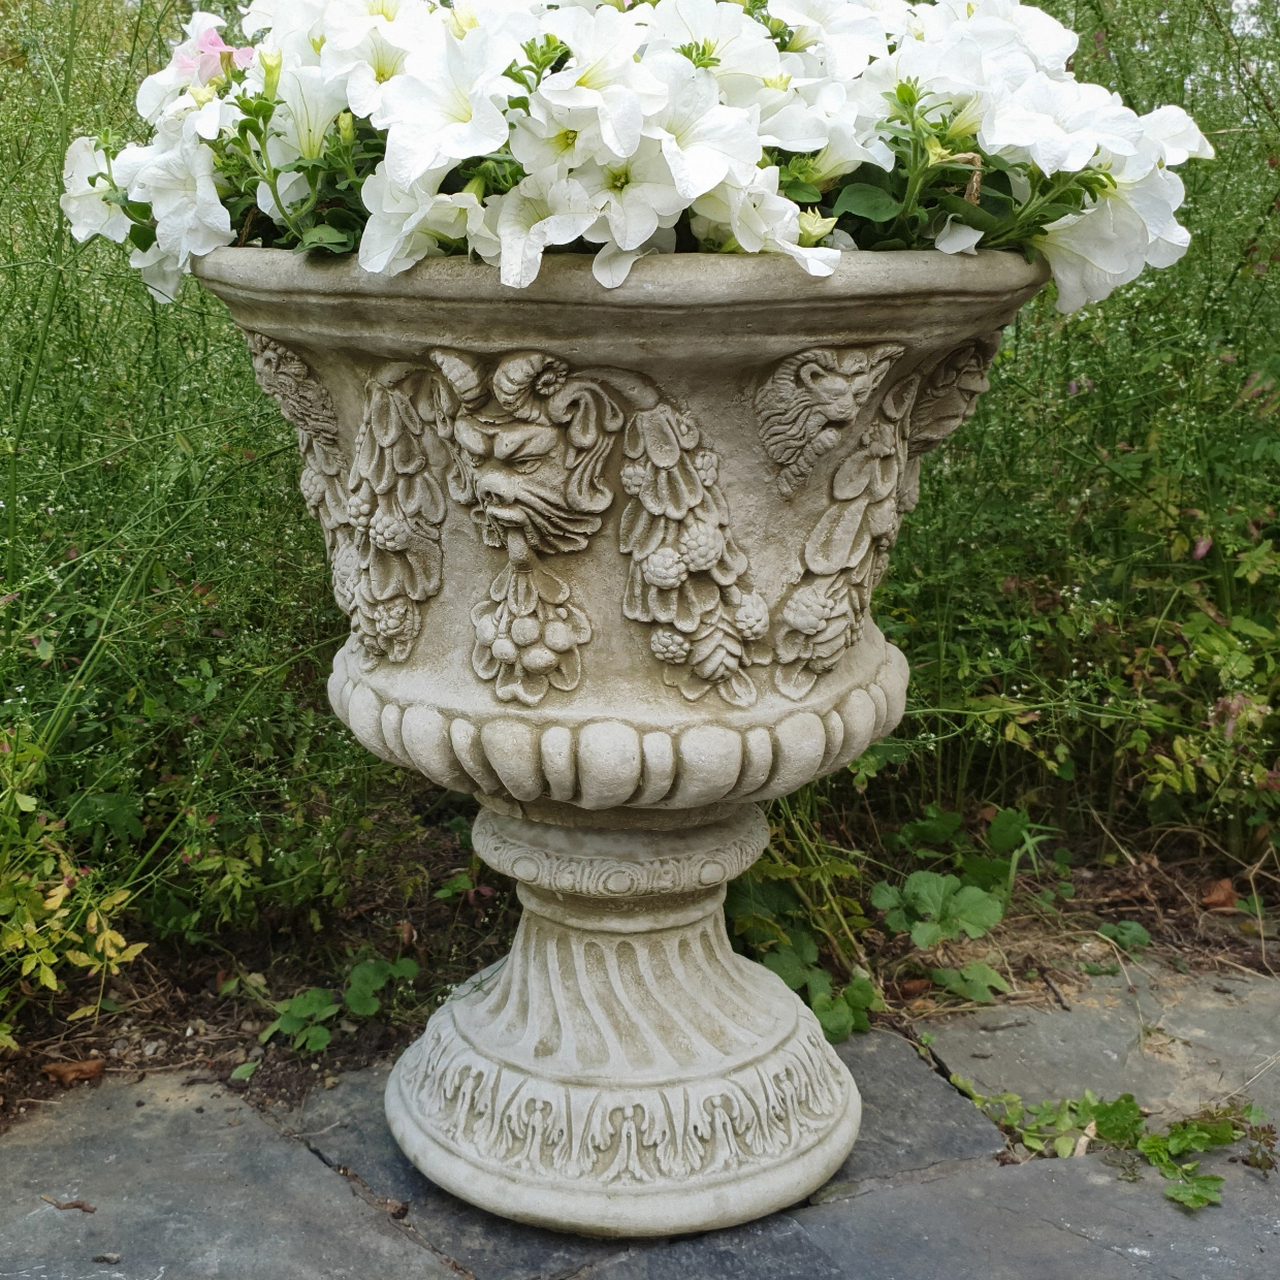 Intricately detailed planter vase